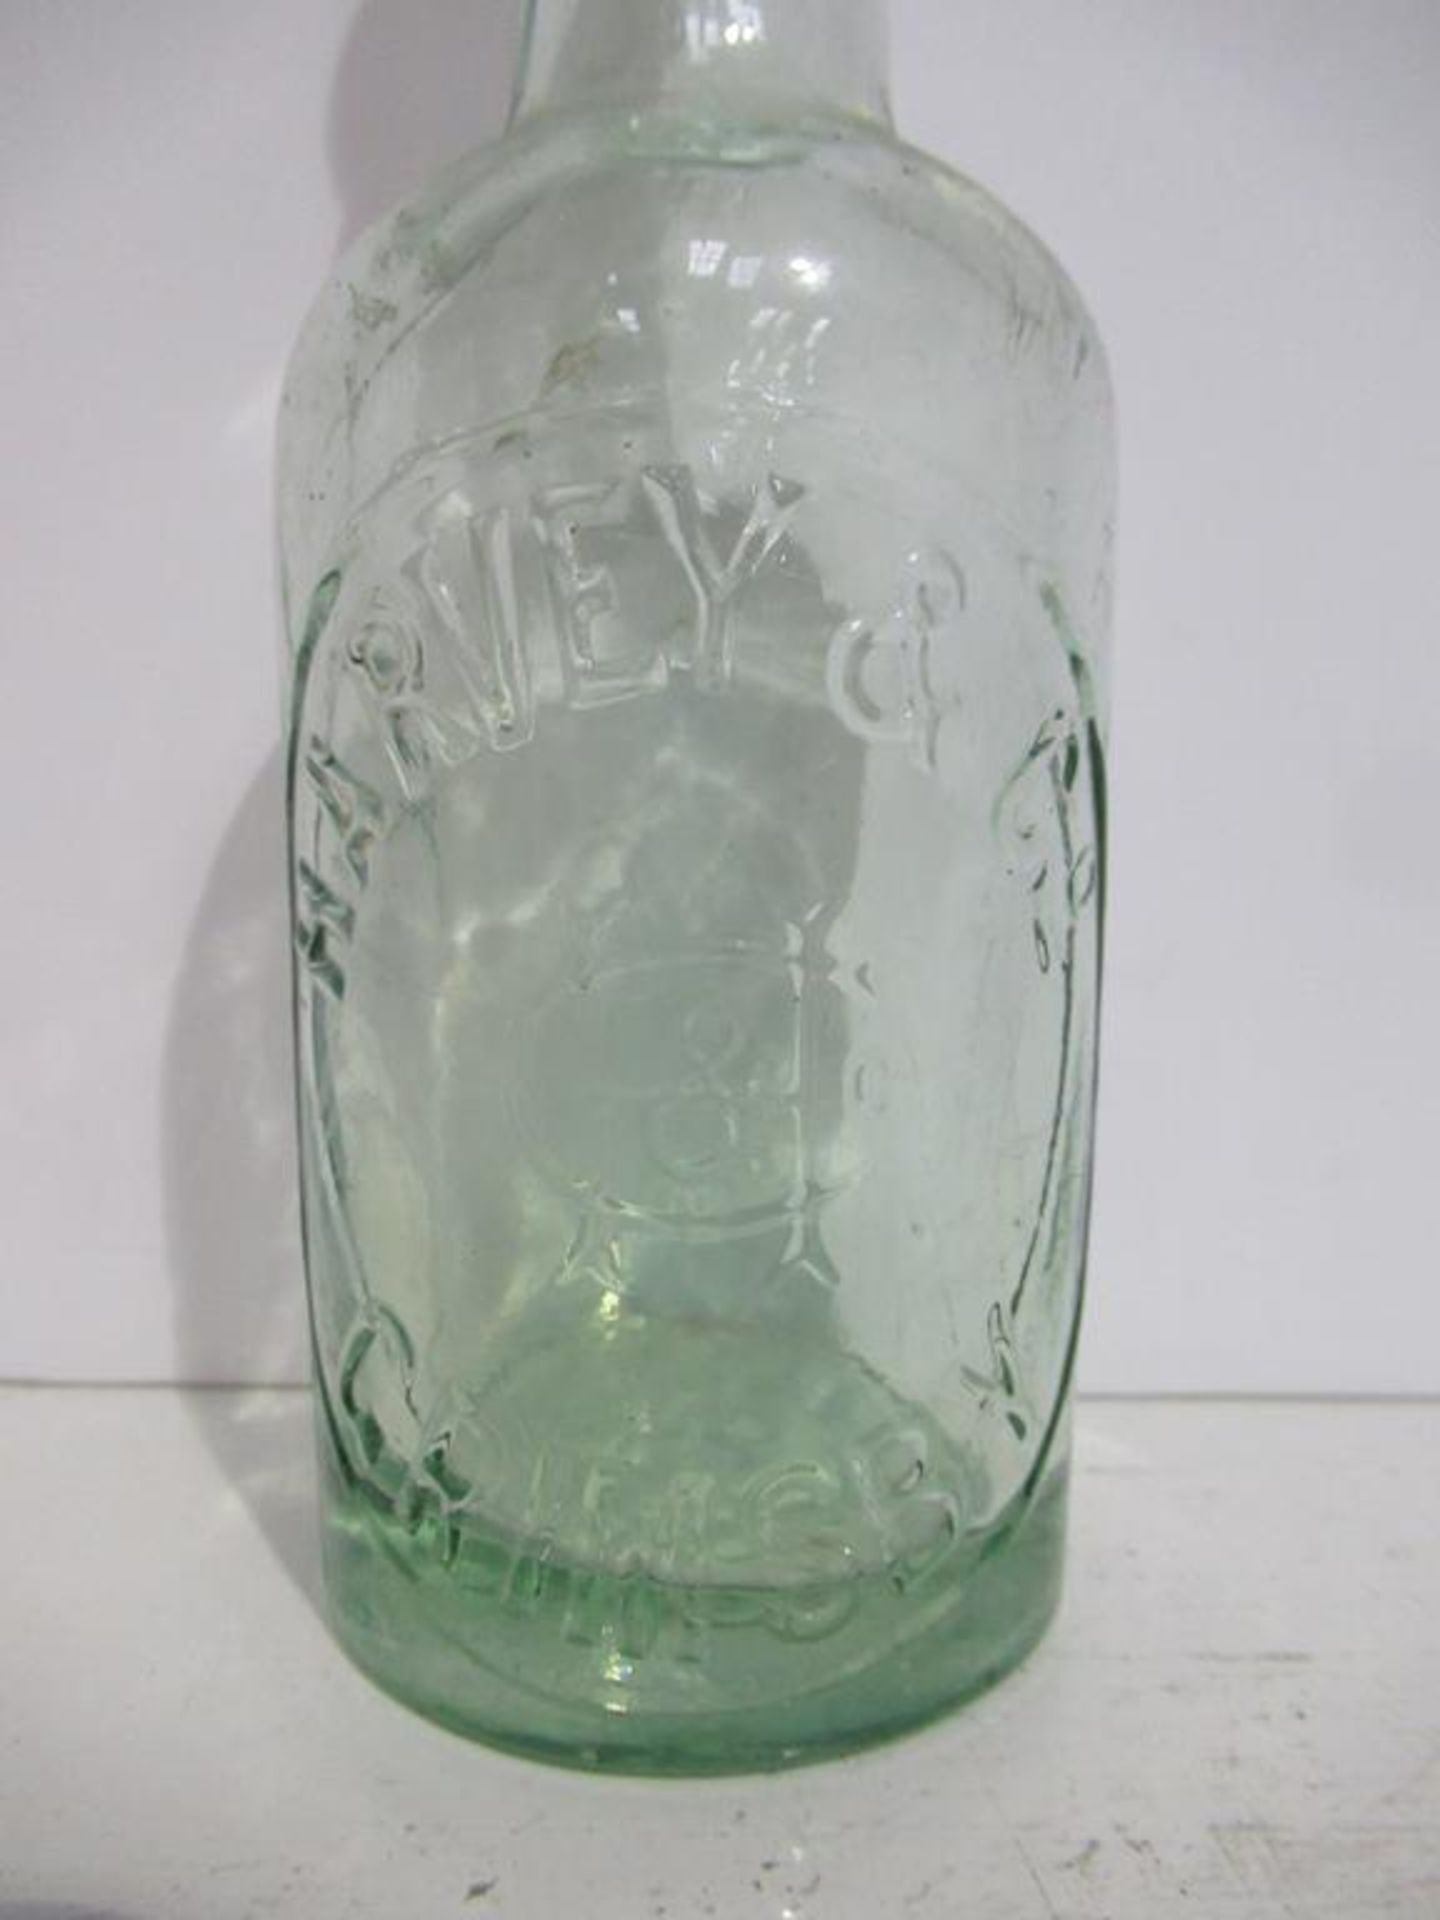 Grimsby Harvey & Co. bottle - Image 5 of 6